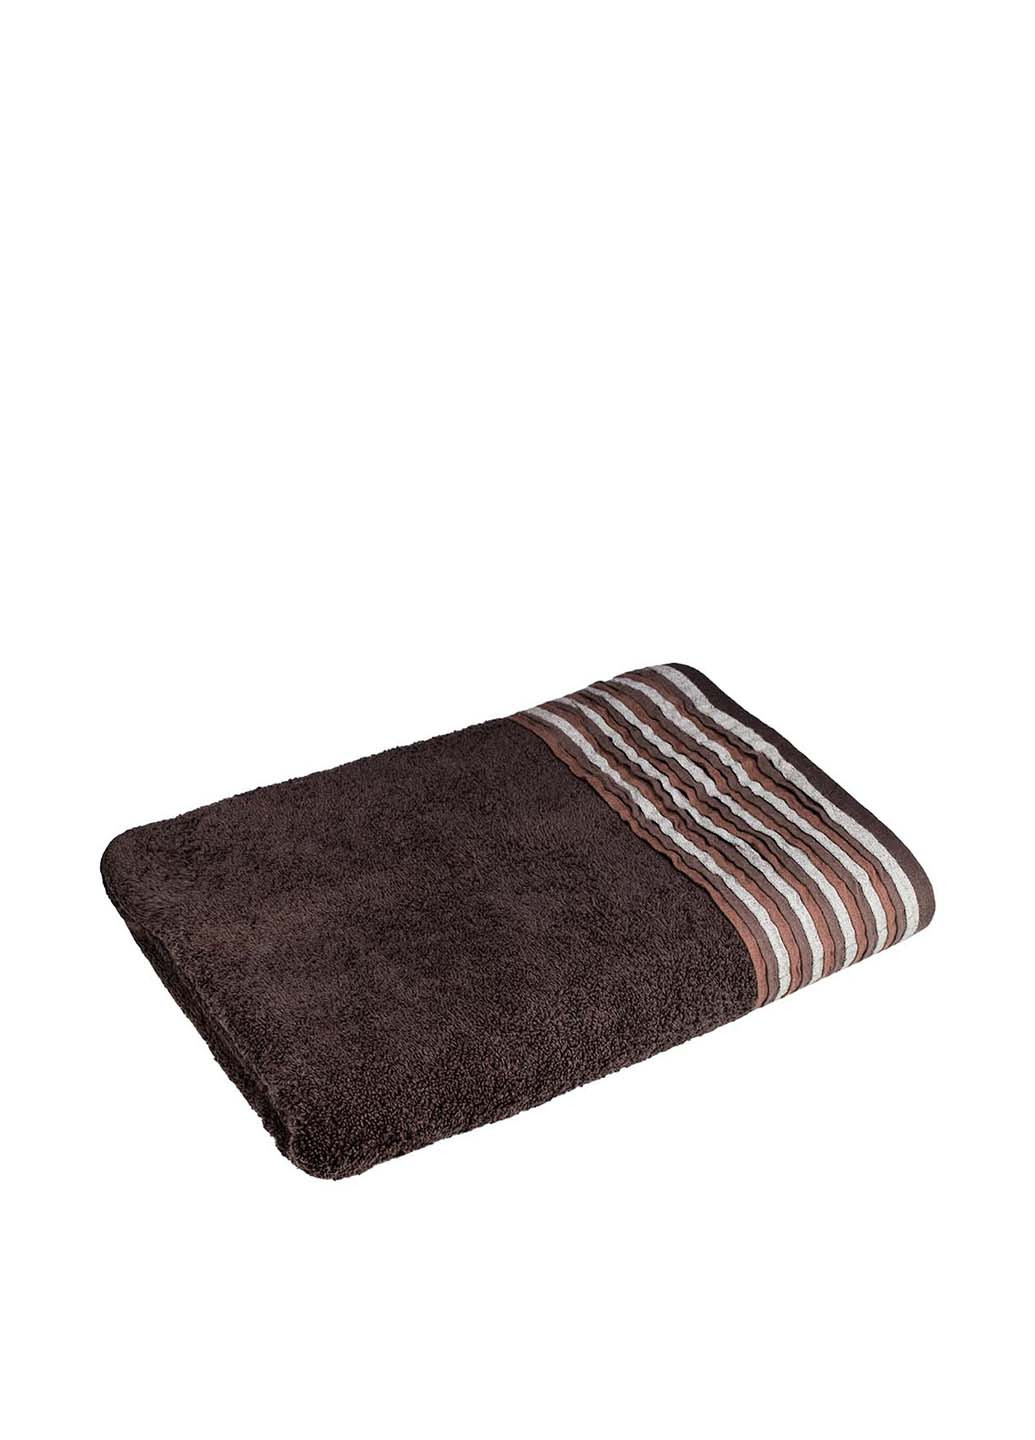 Home Line полотенце, 70х140 см однотонный коричневый производство - Турция